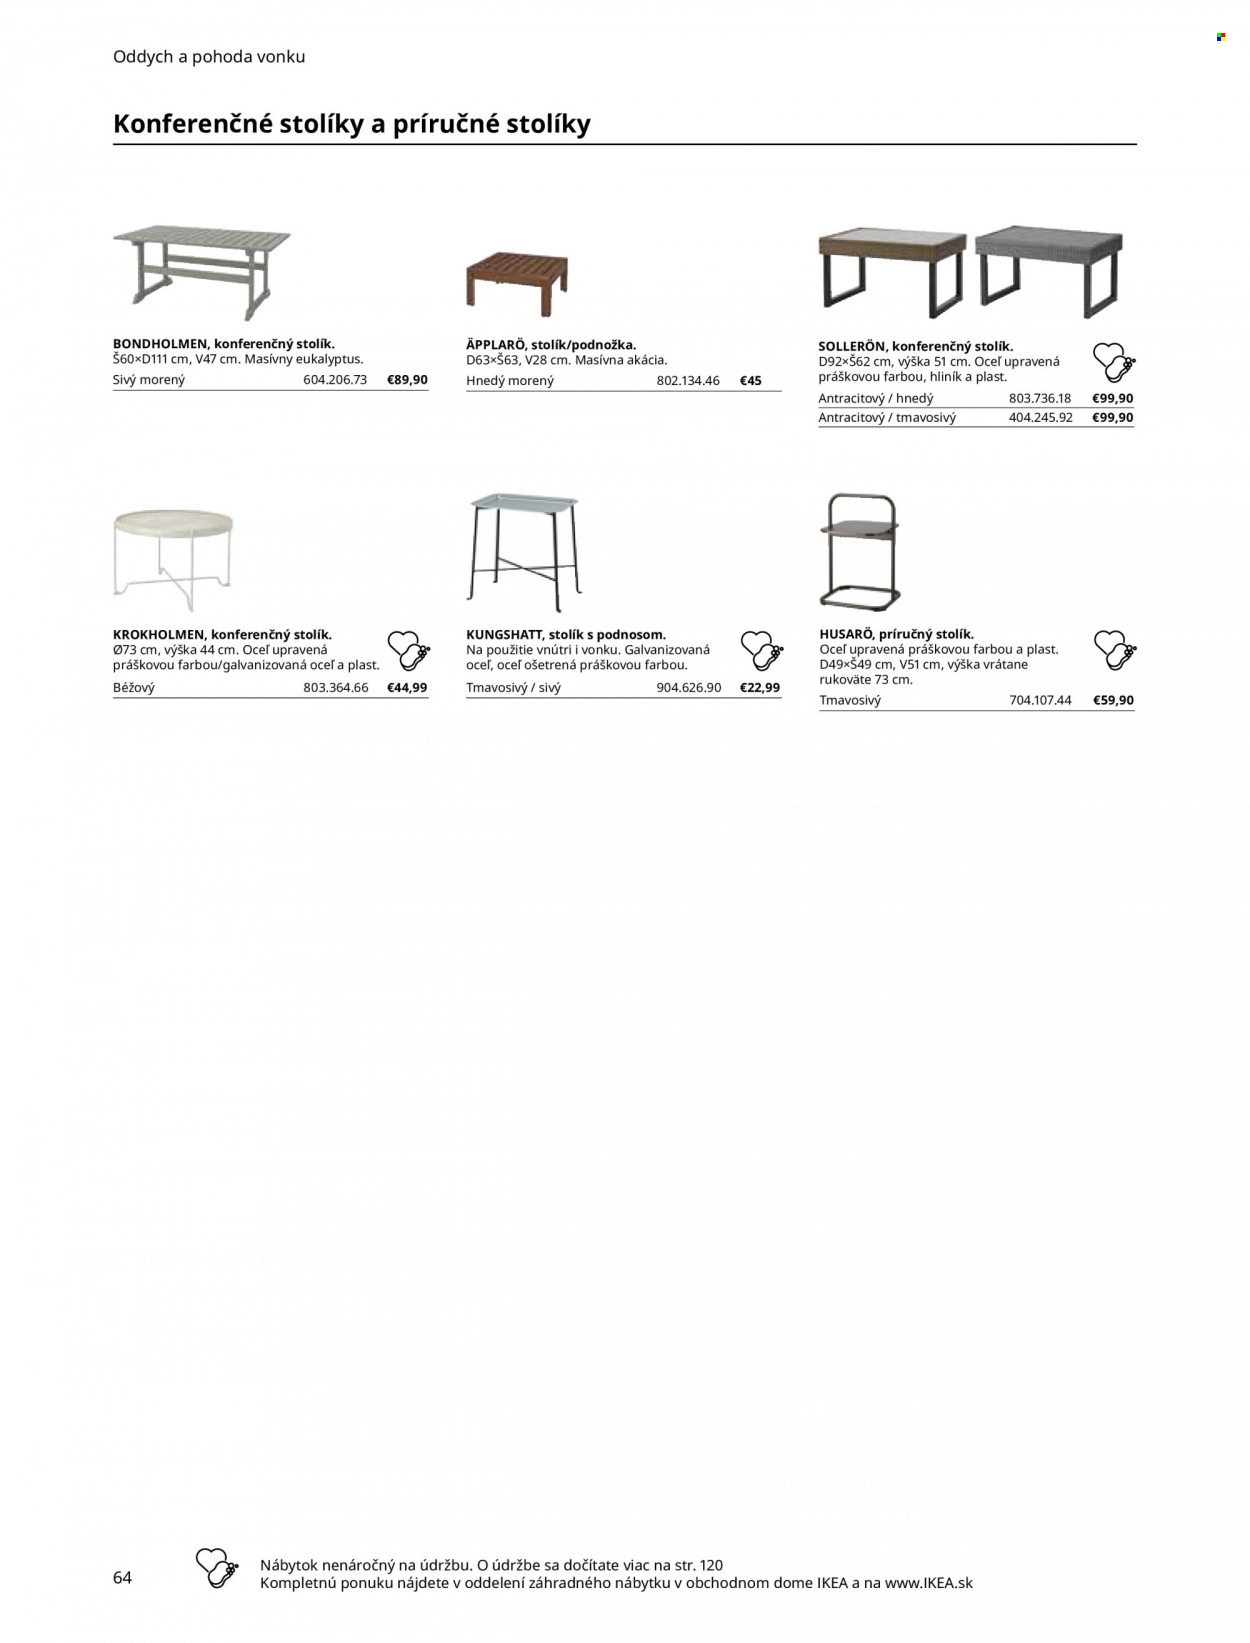 thumbnail - Leták IKEA - Produkty v akcii - konferenčný stolík, príručný stolík, stolík. Strana 64.